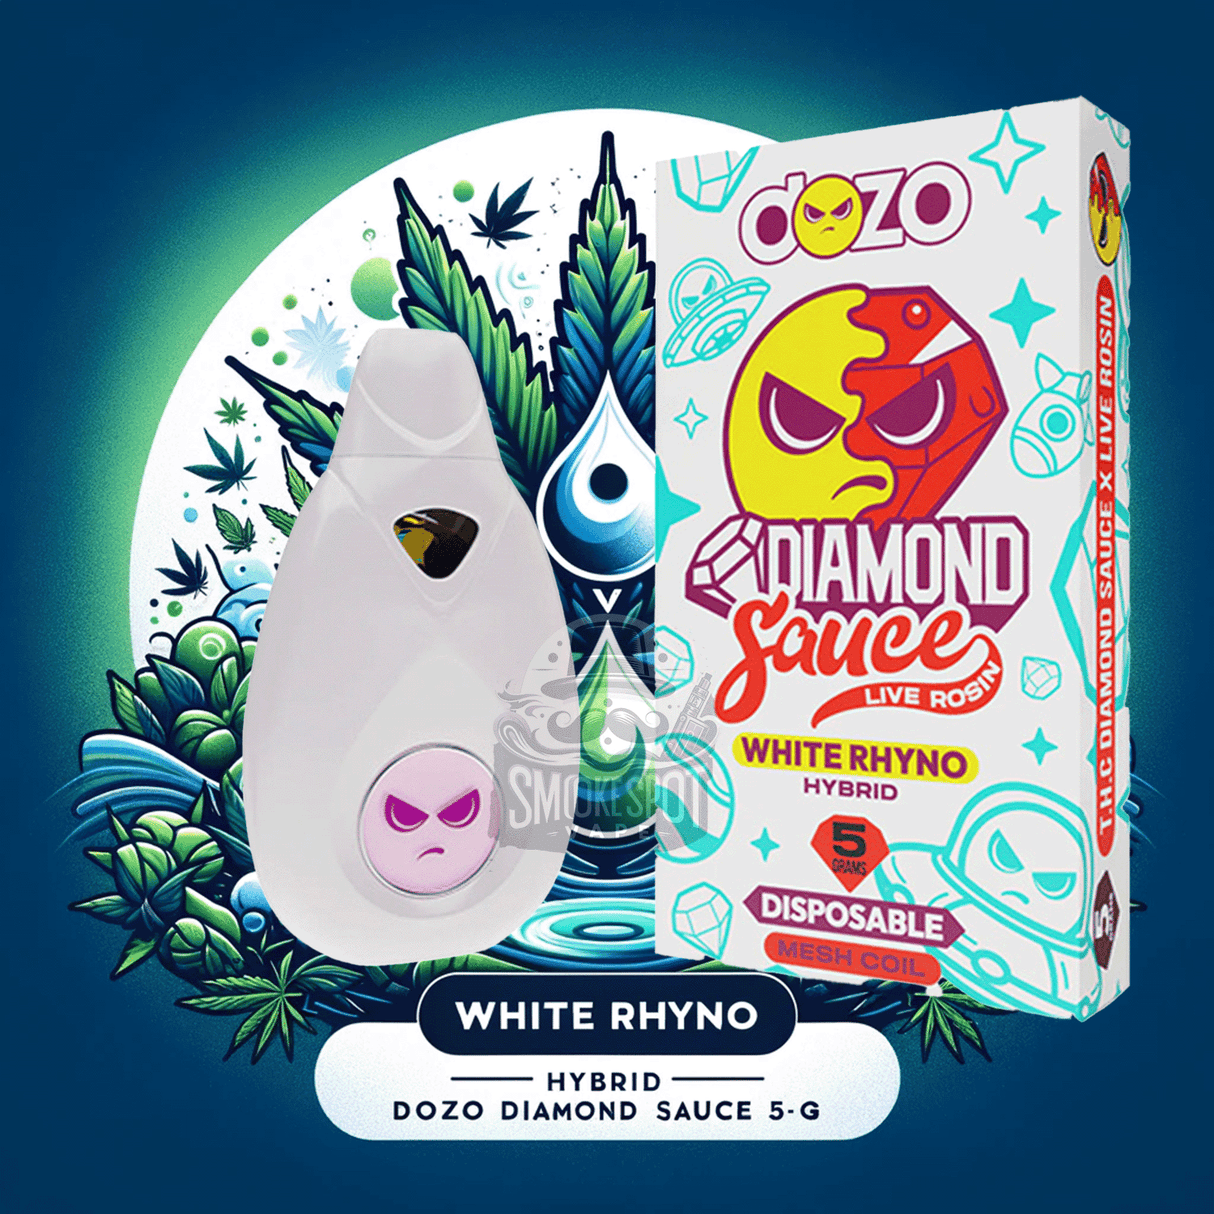 White Rhyno (Hybrid) Dozo Diamond Sauce 5g - White Rhyno (Hybrid) Dozo Diamond Sauce 5g - undefined - Mushroom - smokespotvape.com